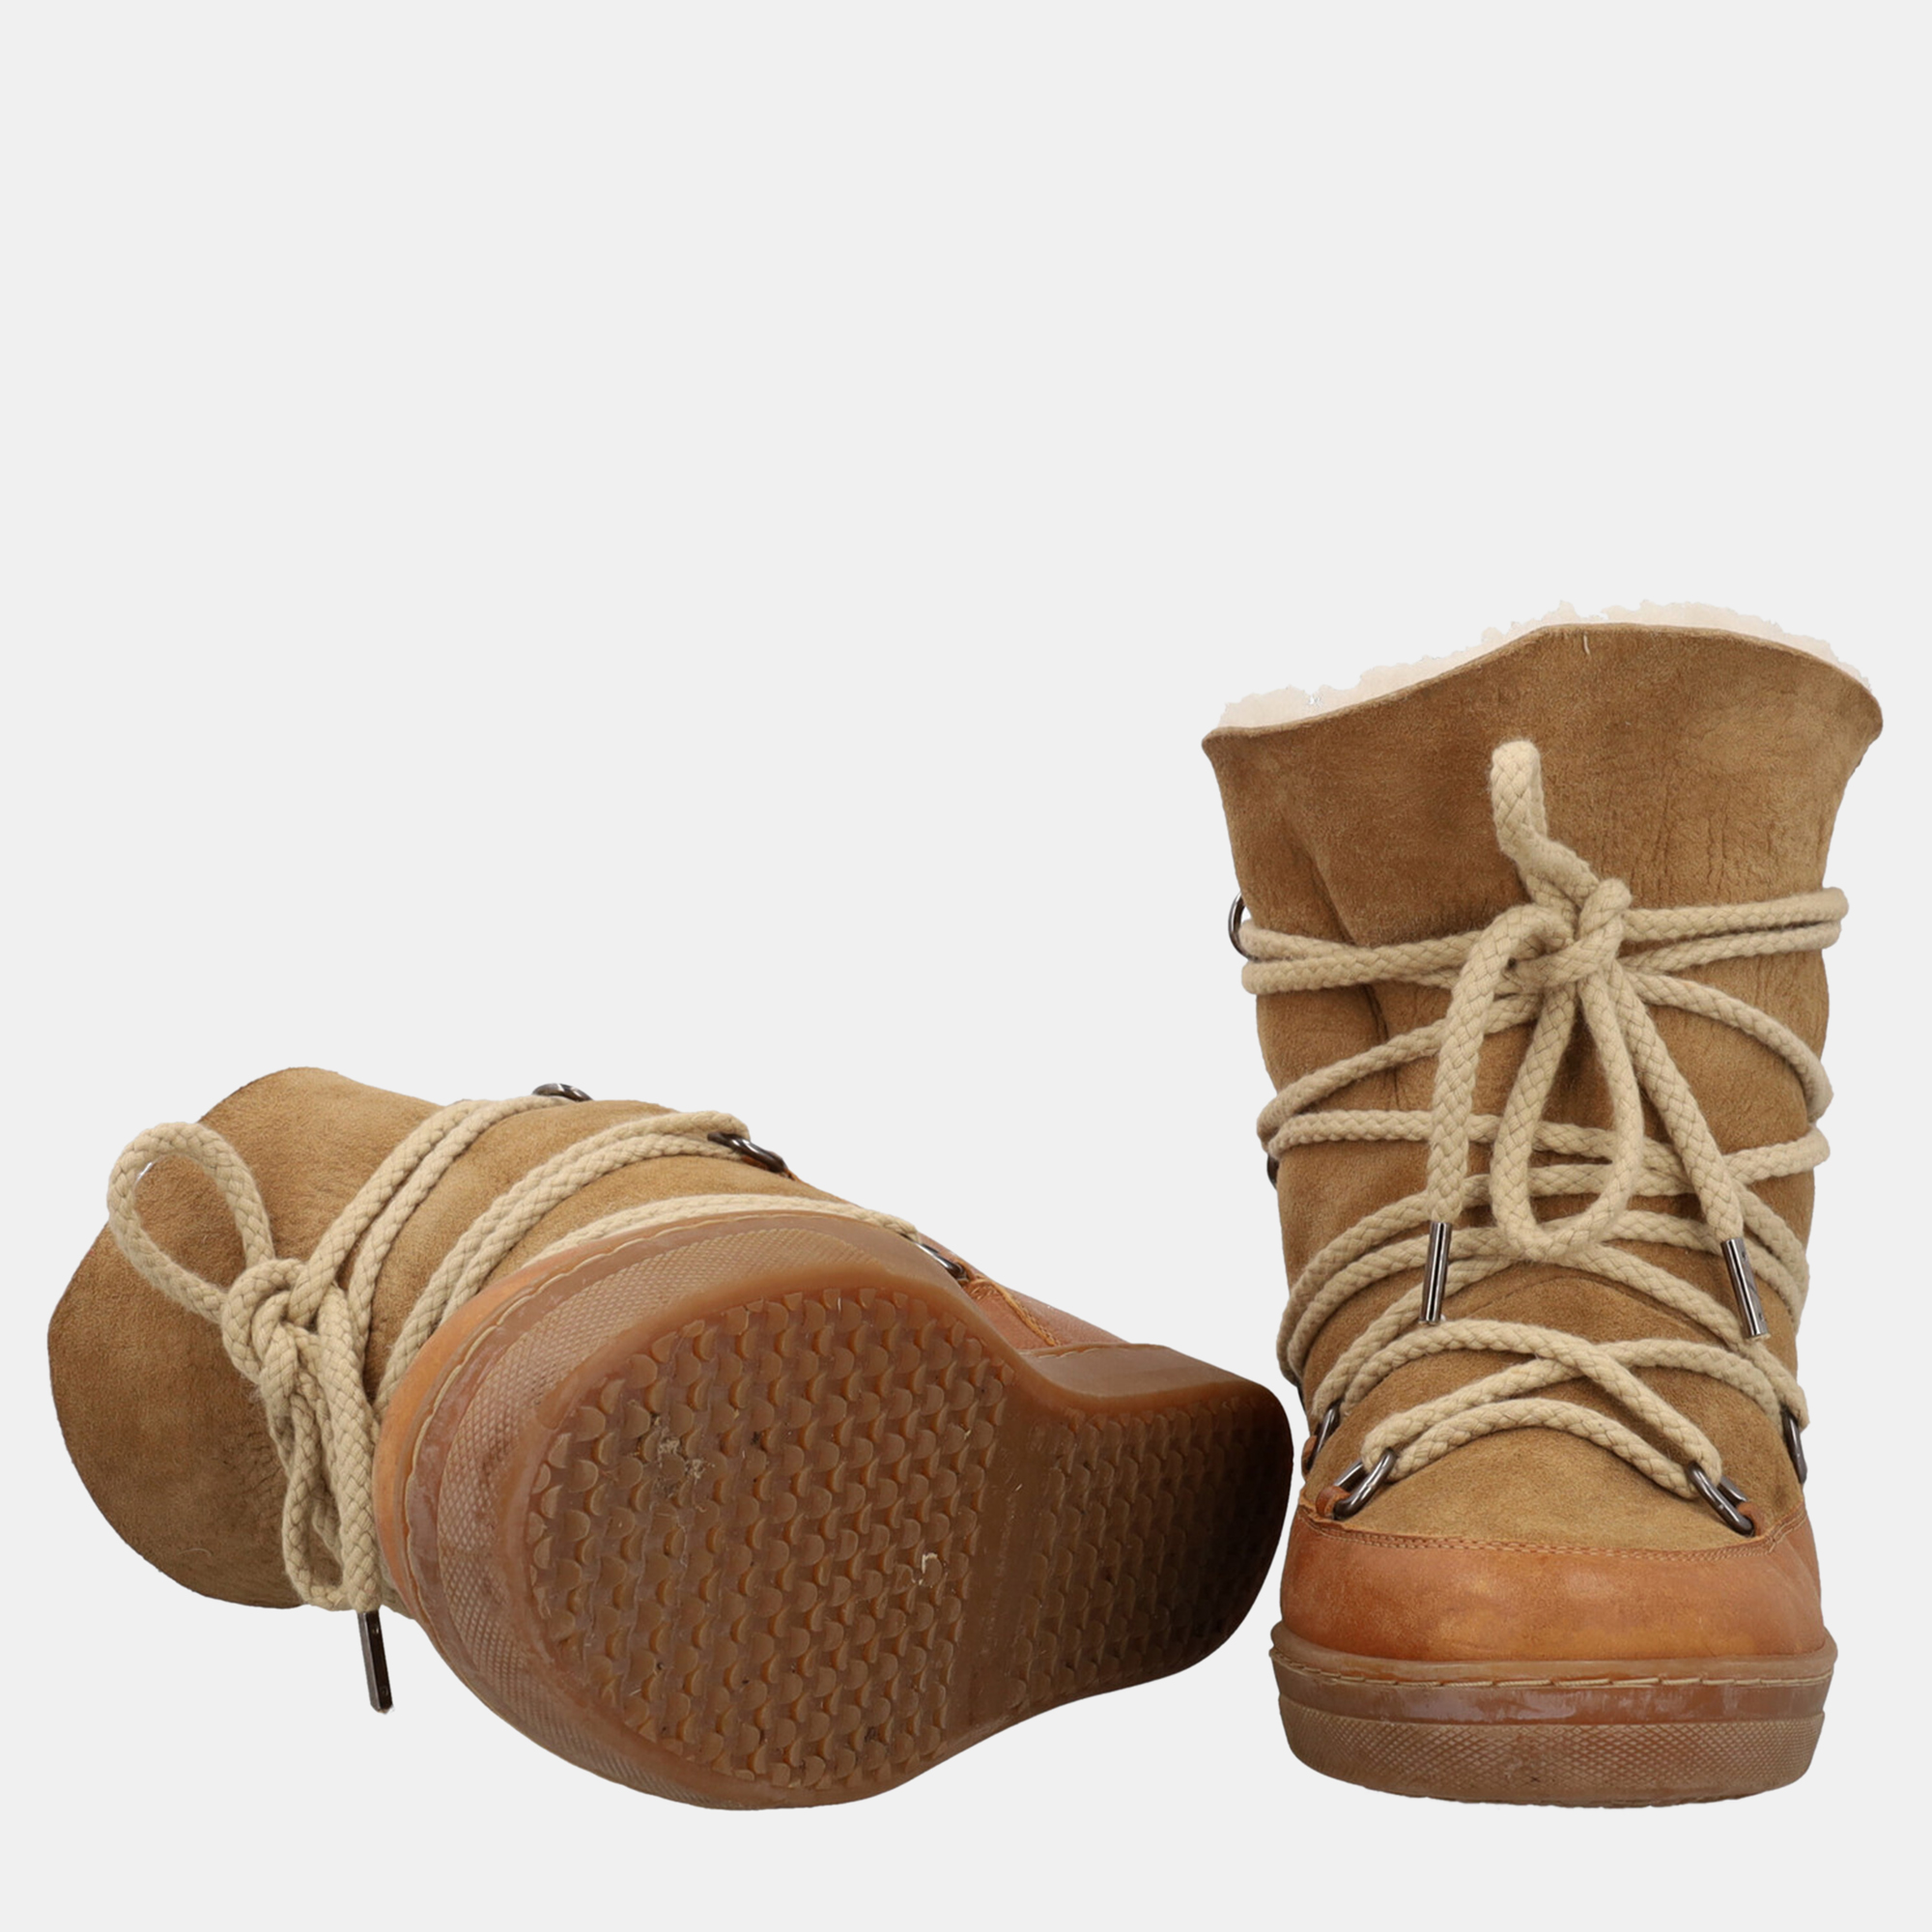 Isabel Marant Etoile  Women's Leather Ankle Boots - Camel Color - EU 39